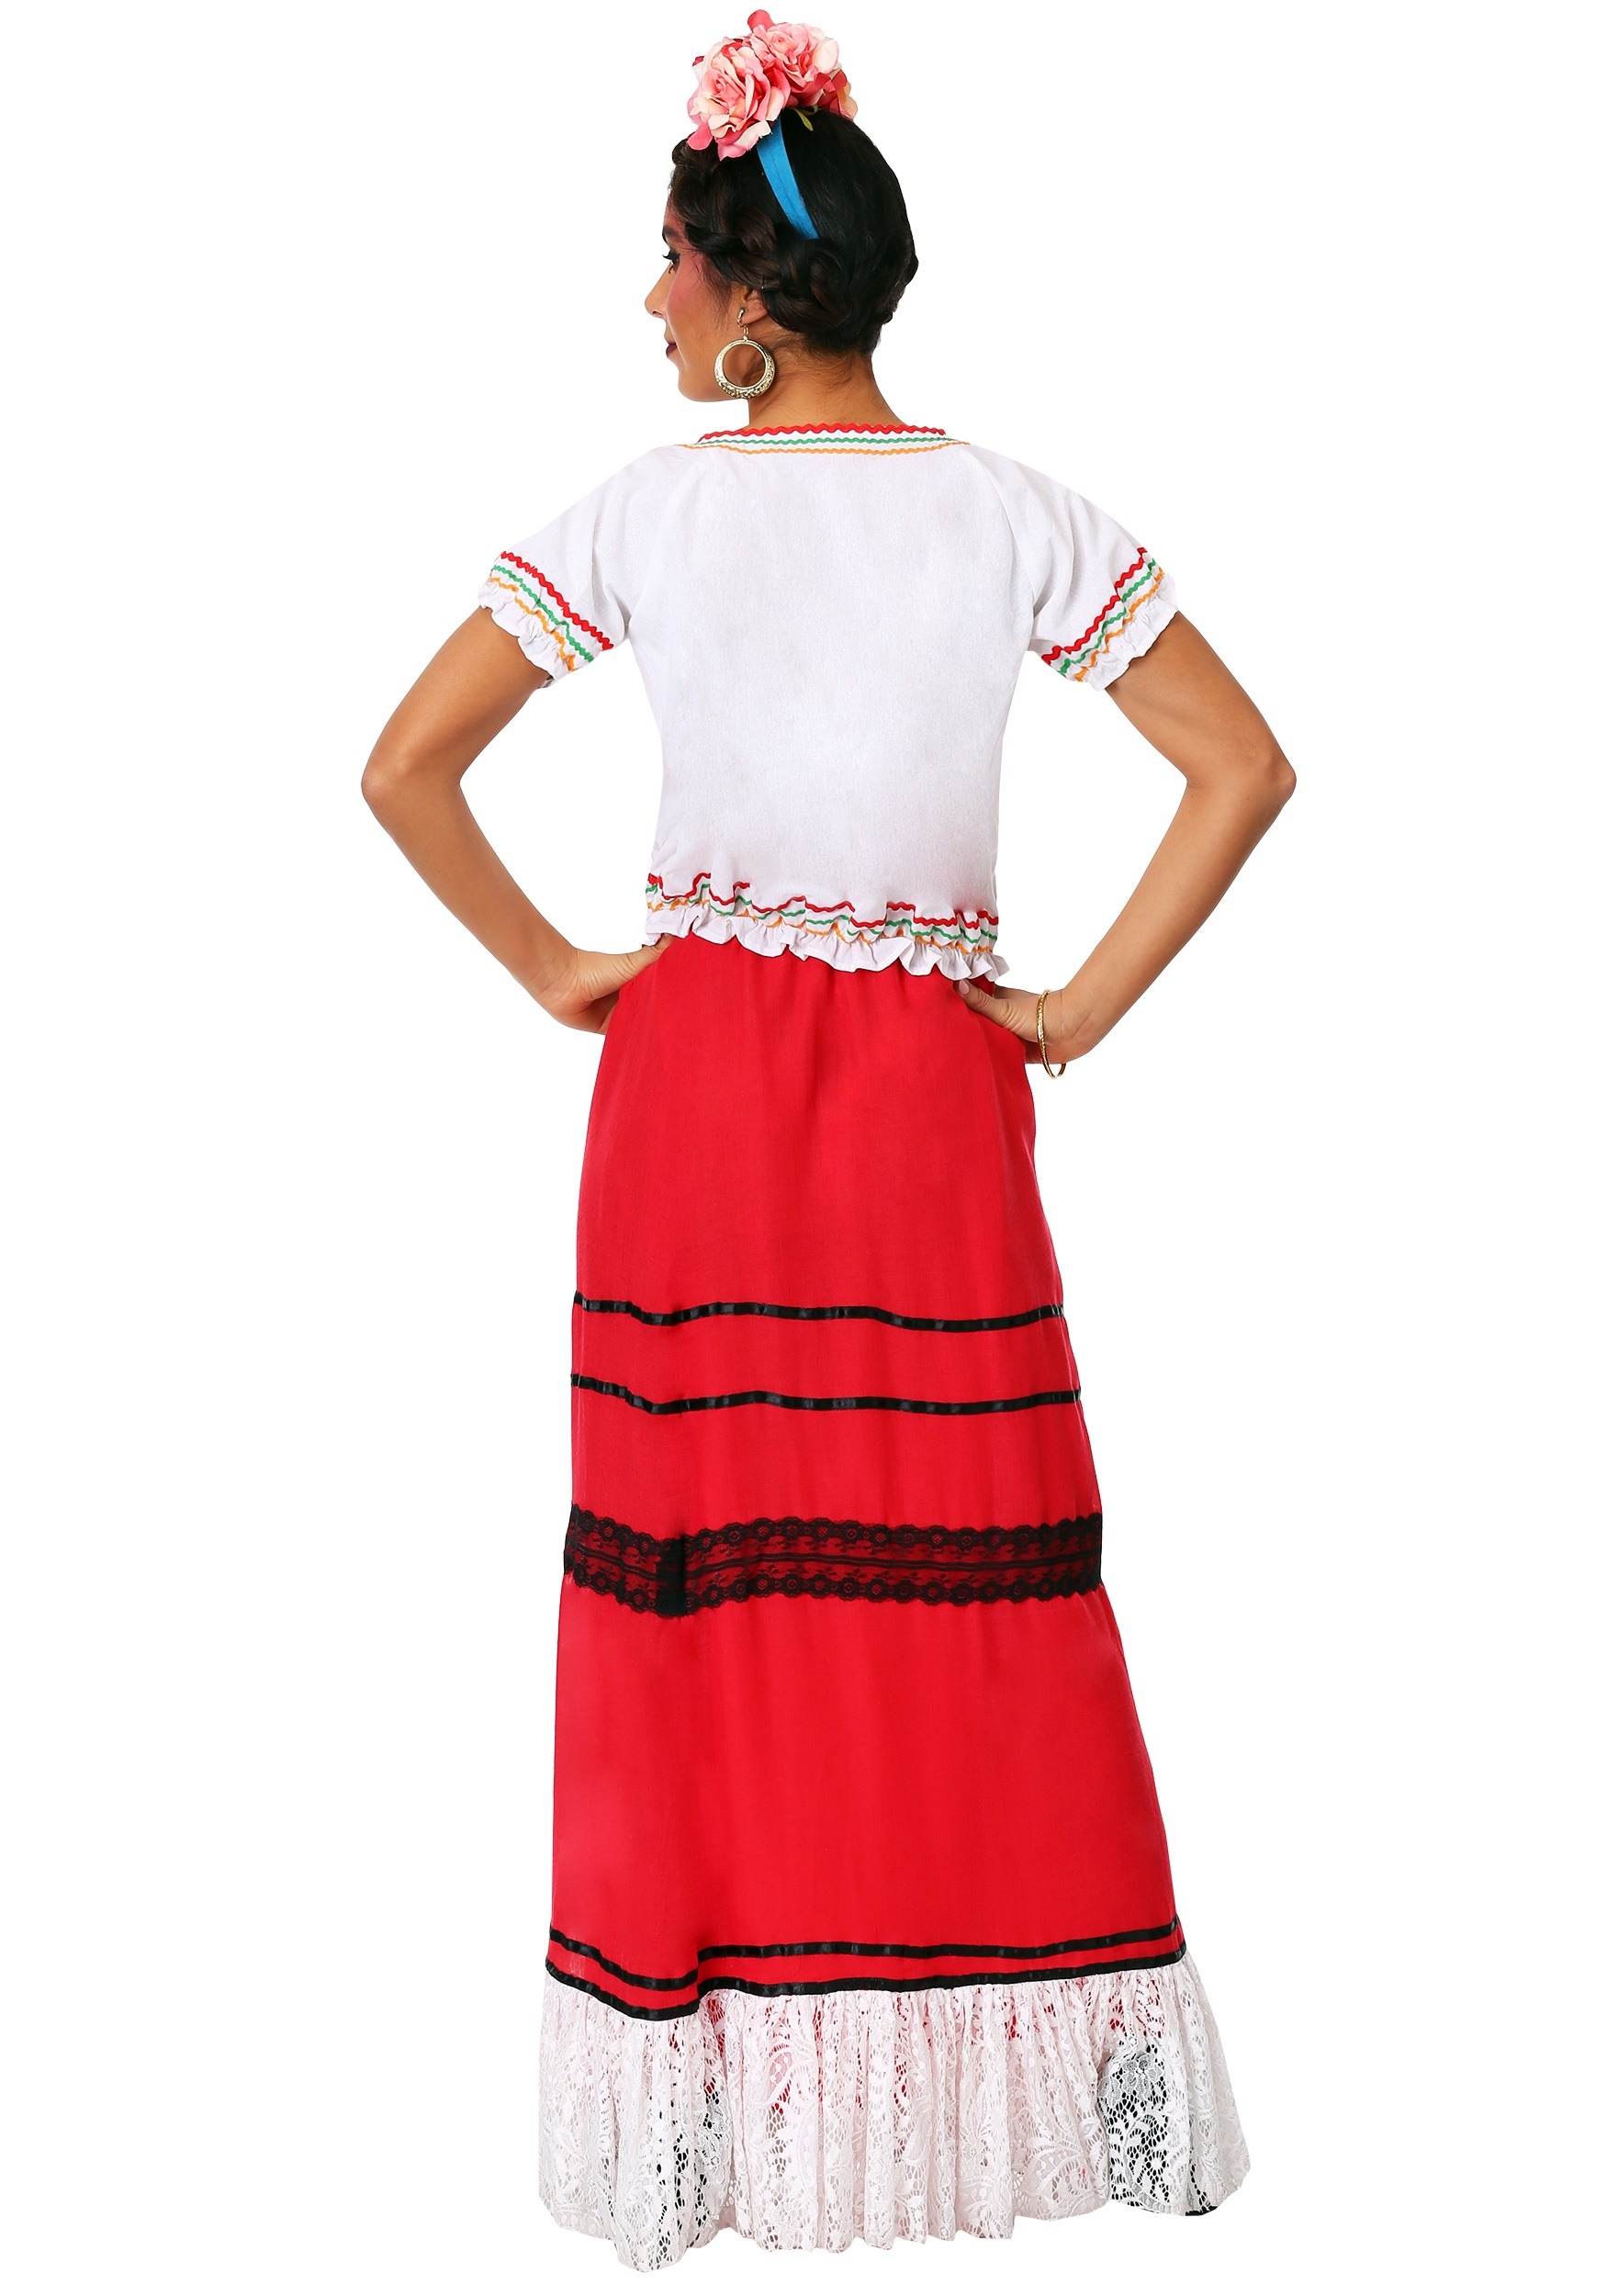 Red Frida Kahlo Women's Plus Size Costume